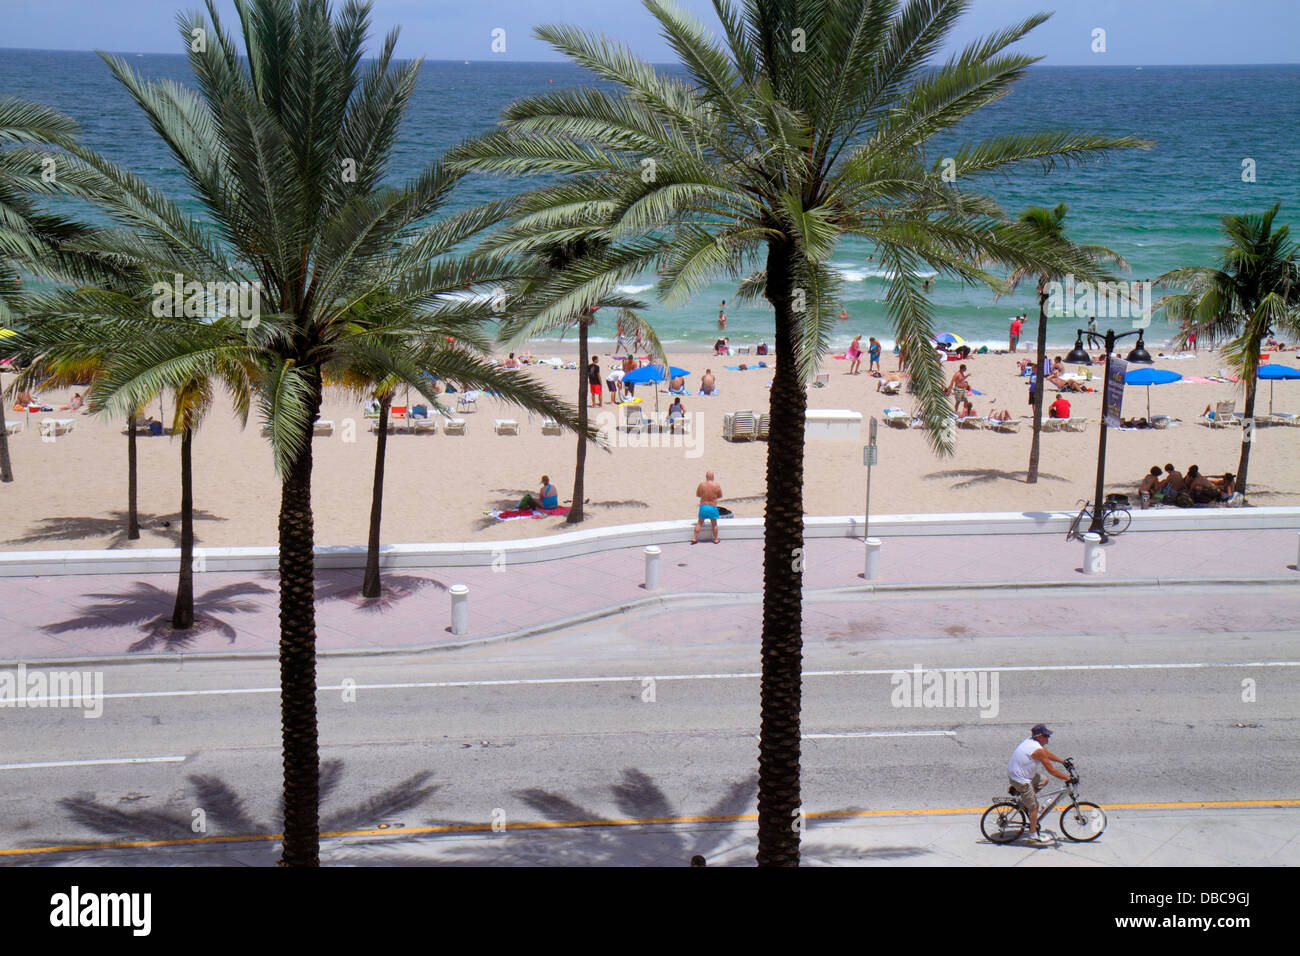 Fort Ft. Lauderdale Florida, South Fort Lauderdale Beach Boulevard, A1A, Sonnenanbeter, Atlantischer Ozean, Sand, Palmen, Ufermauer, Meeresmauer, Biker-Fahrrad Stockfoto